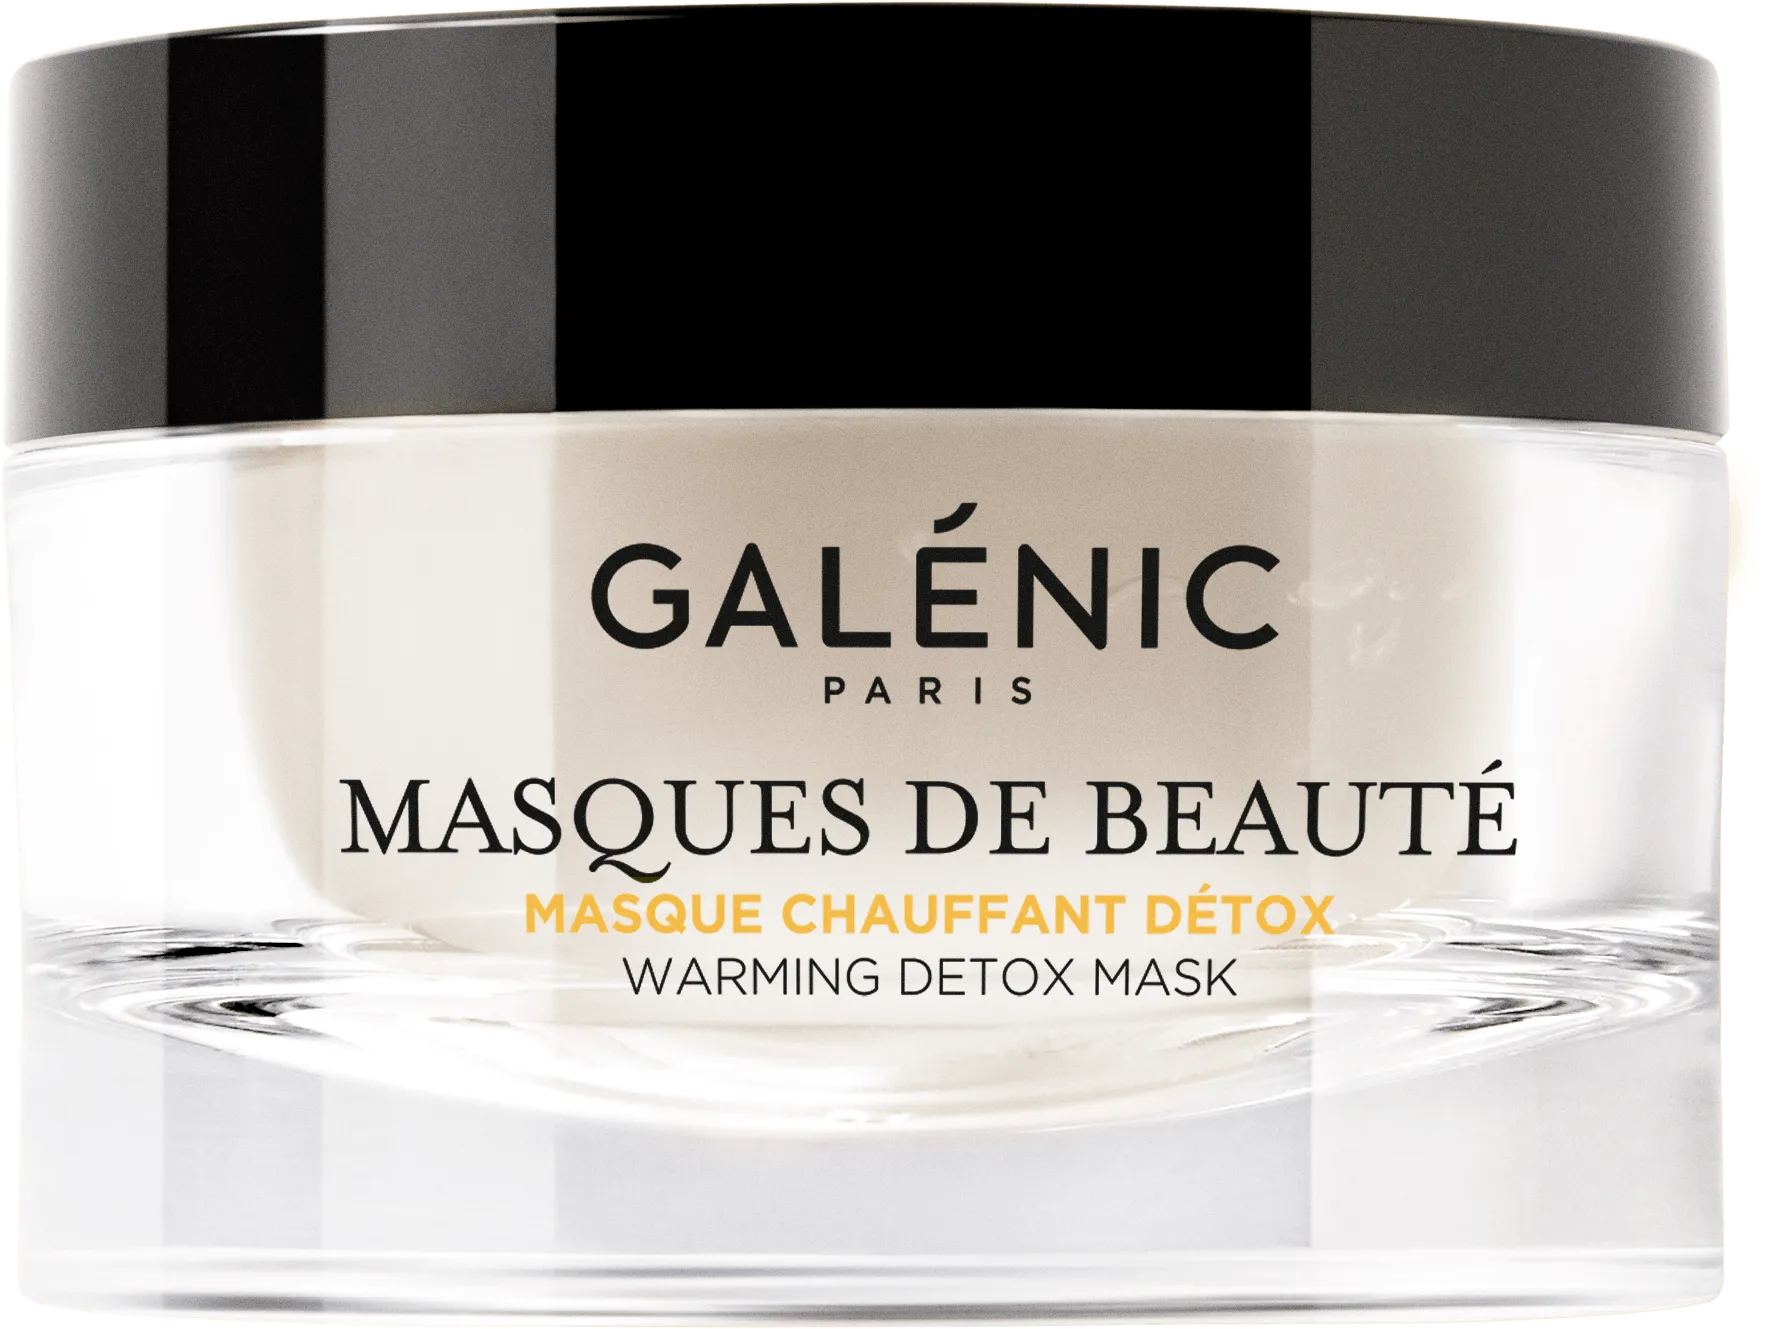 Galenic Beaute De Masques, detoksykująca maska do twarzy, 50ml